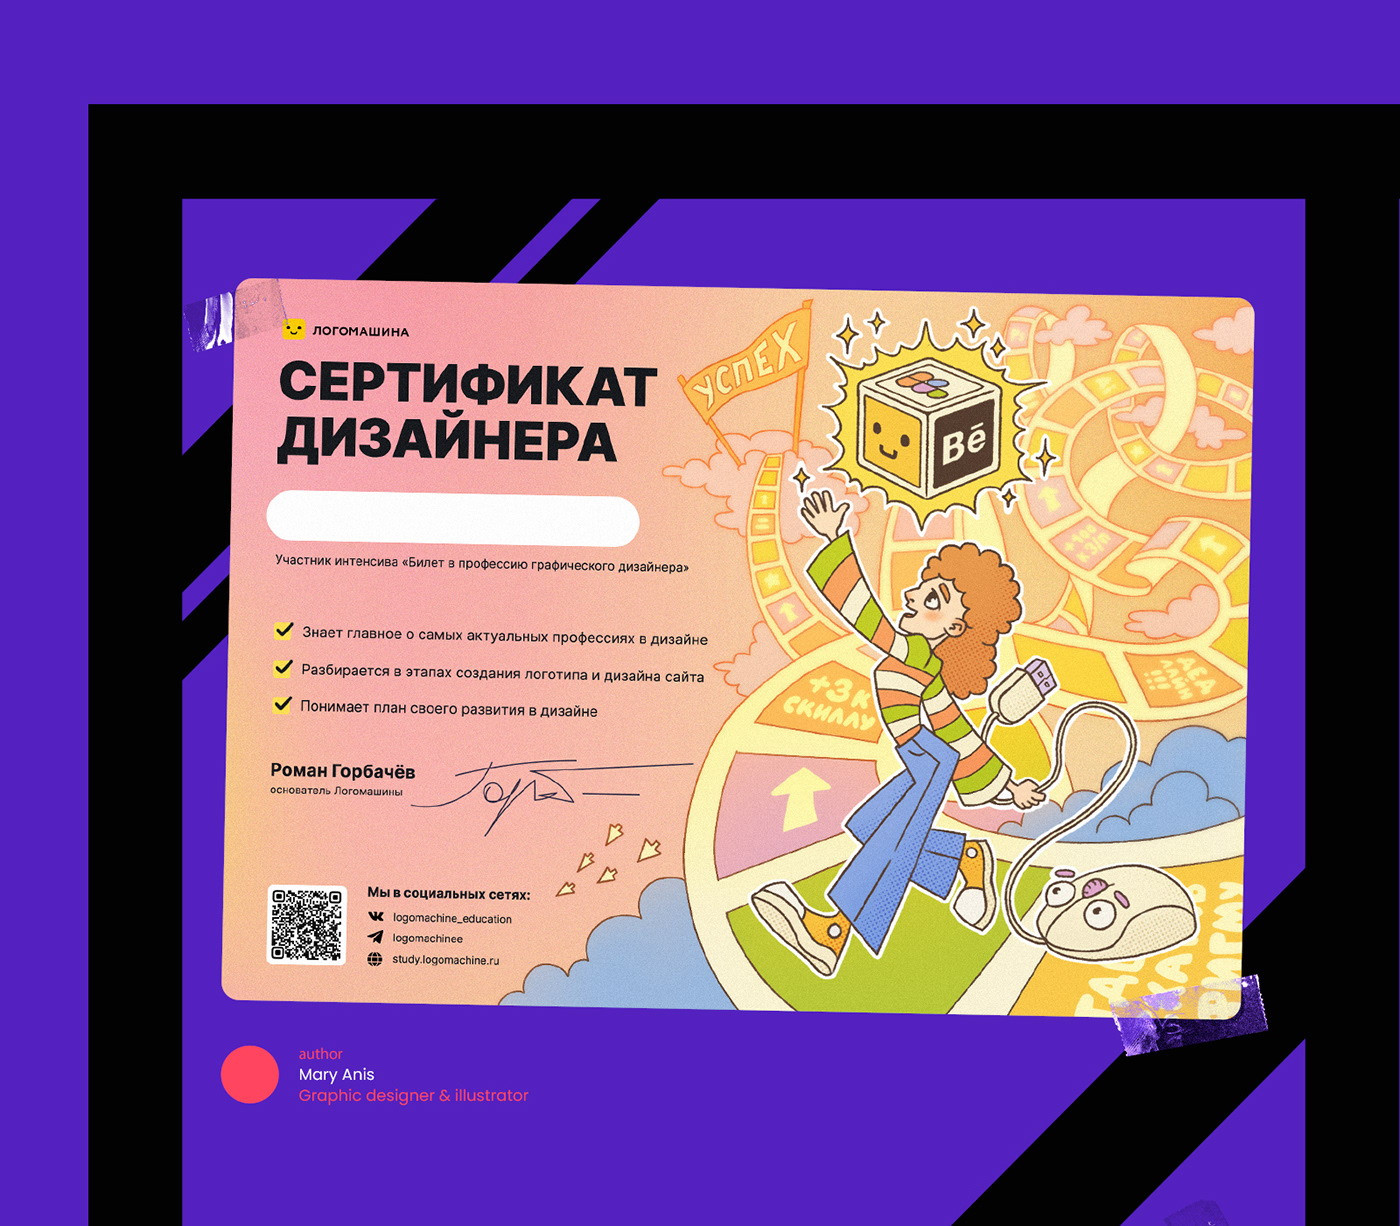 ILLUSTRATION  Character design  cartoon adobe illustrator visual identity graphic design  brand identity certificate certificate design award